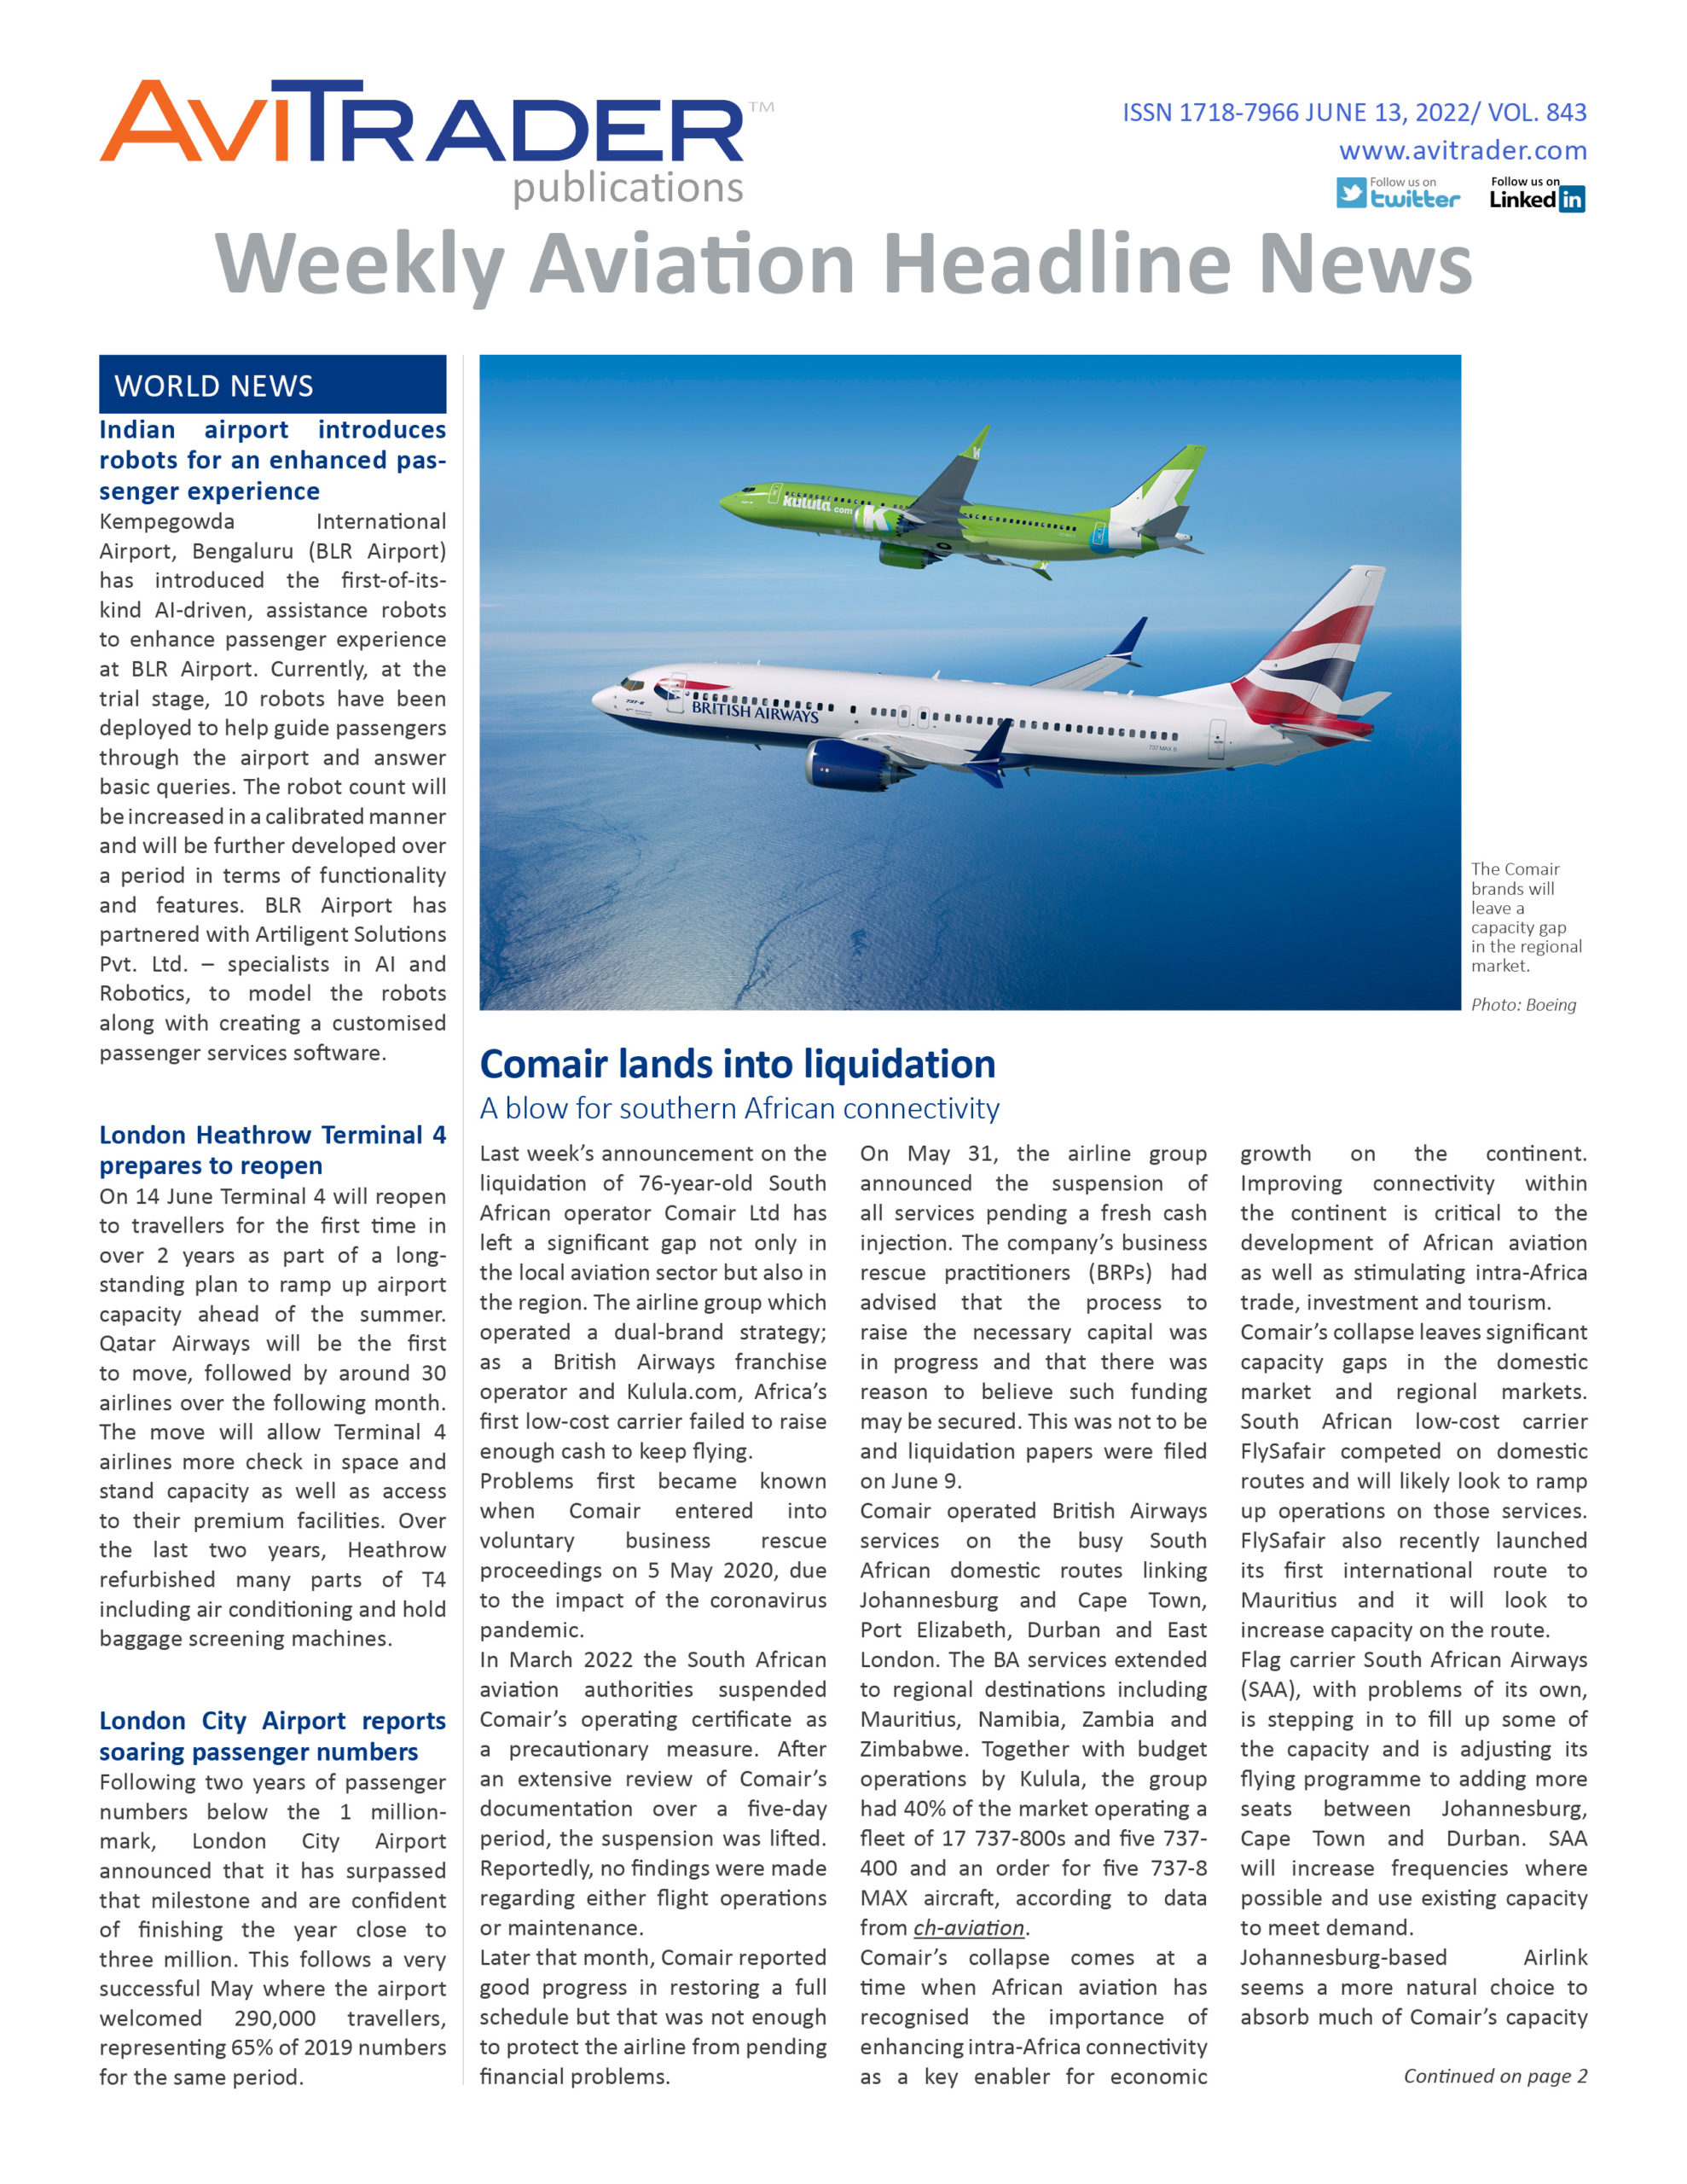 AviTrader_Weekly_Headline_News_Cover_2022-06-13